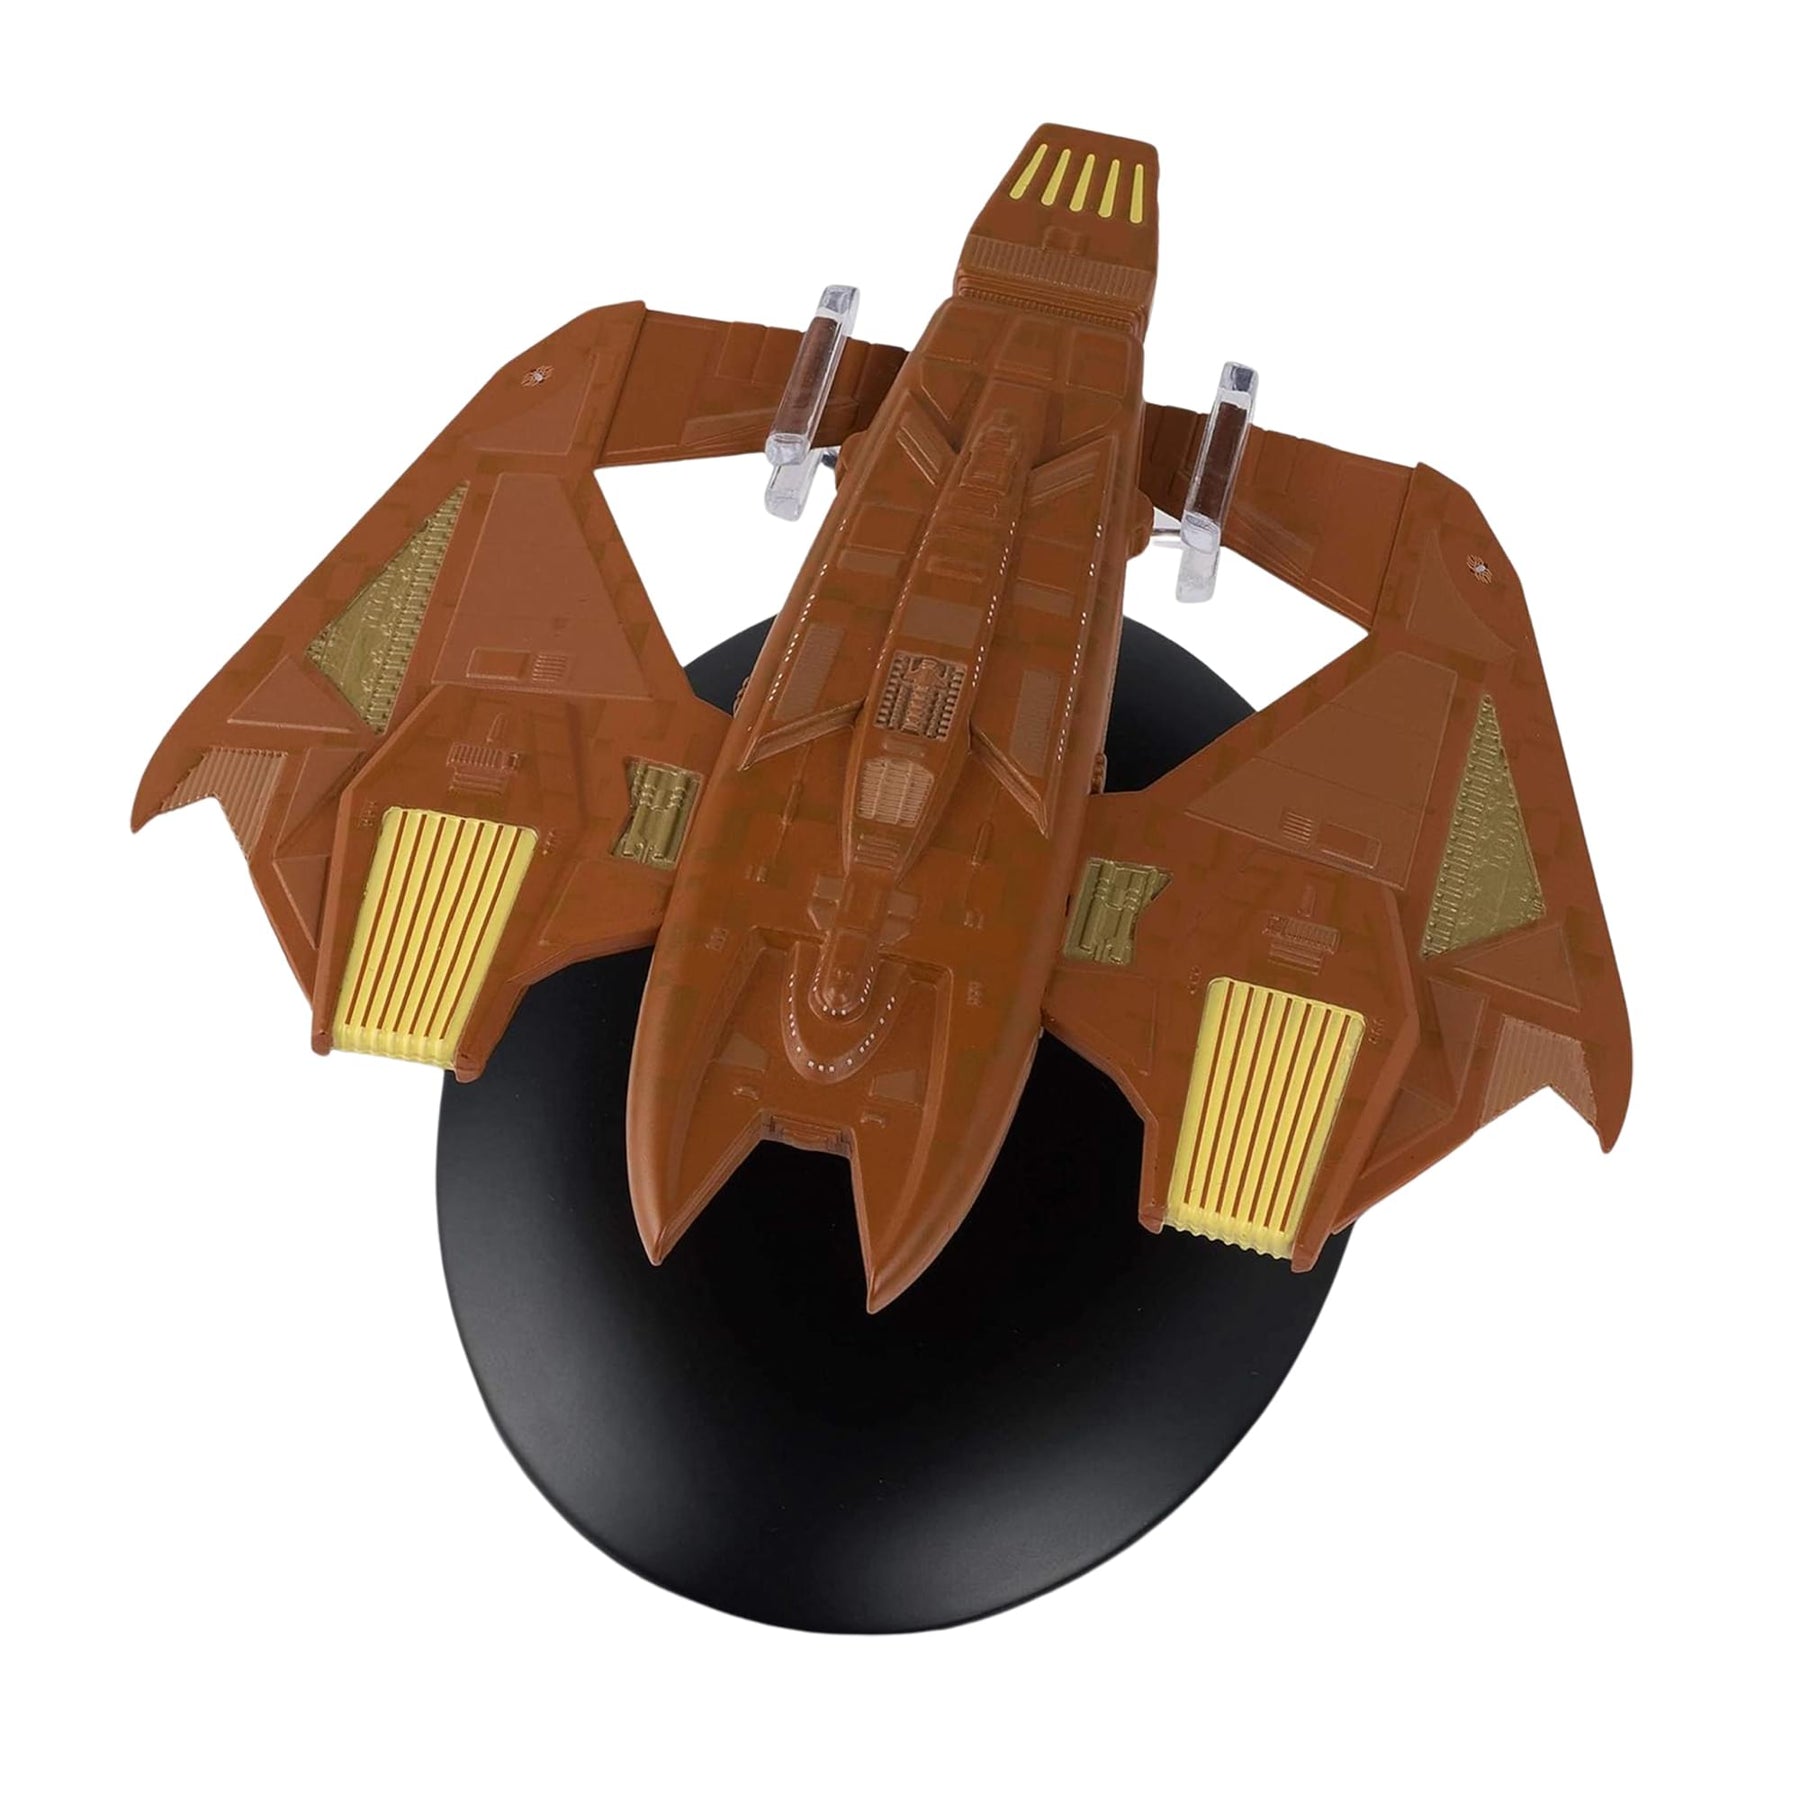 Eaglemoss Star Trek Starship Replica | Vidiian Warship